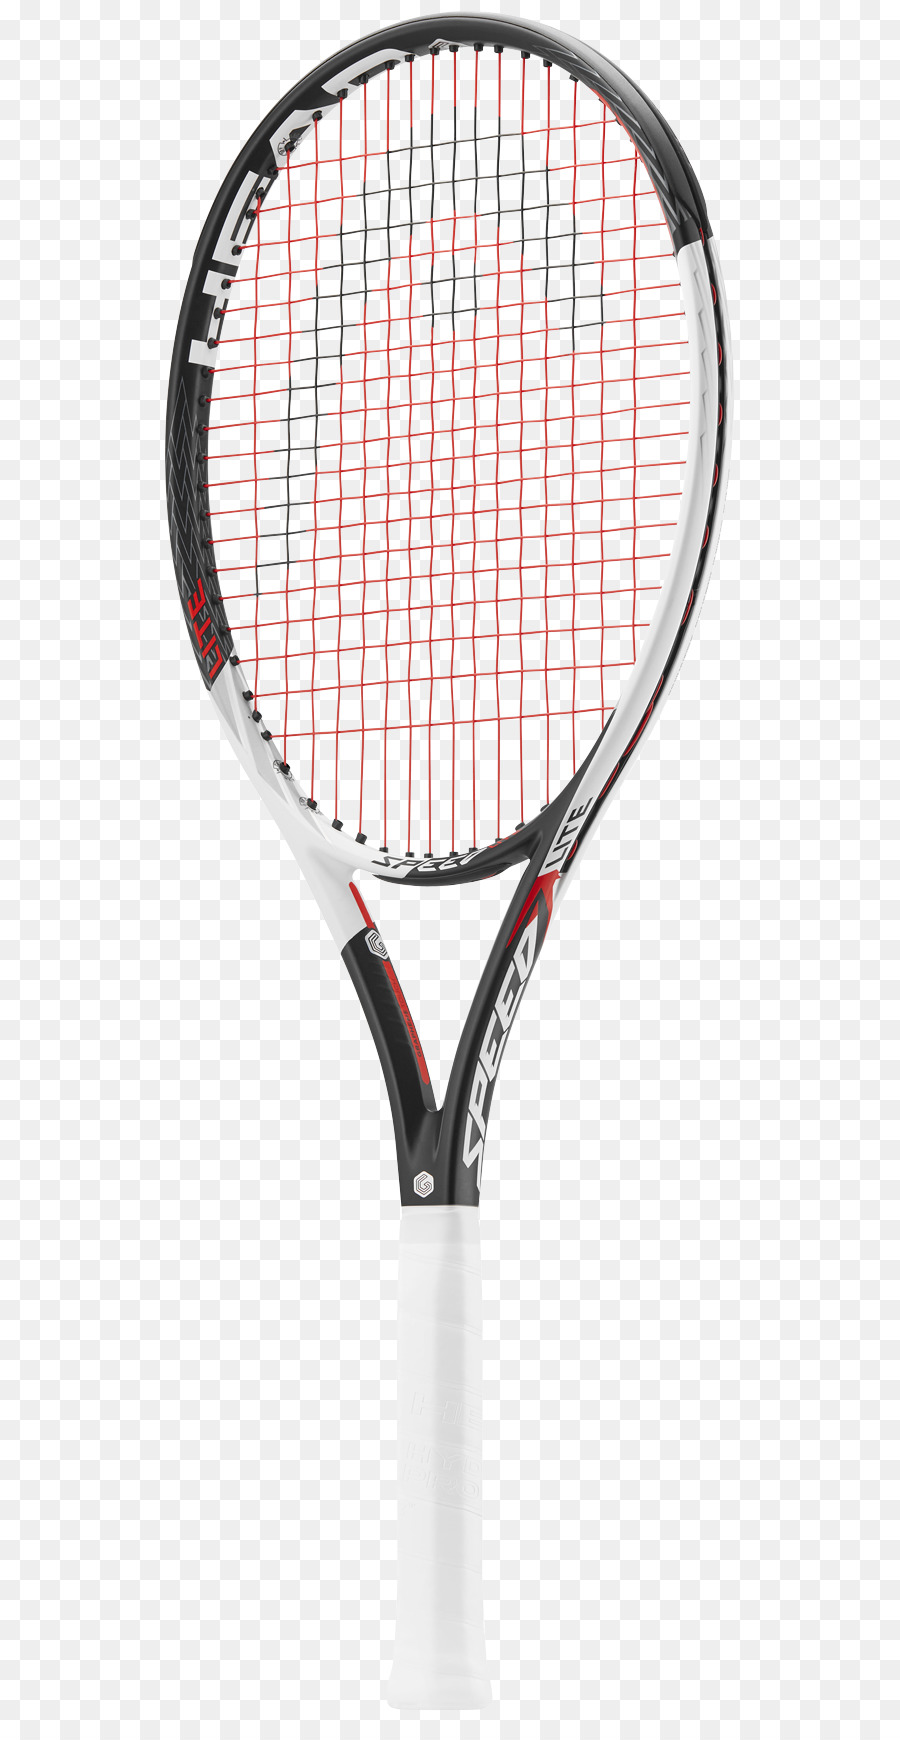 Rakieta Tenisowa Tennis Racket